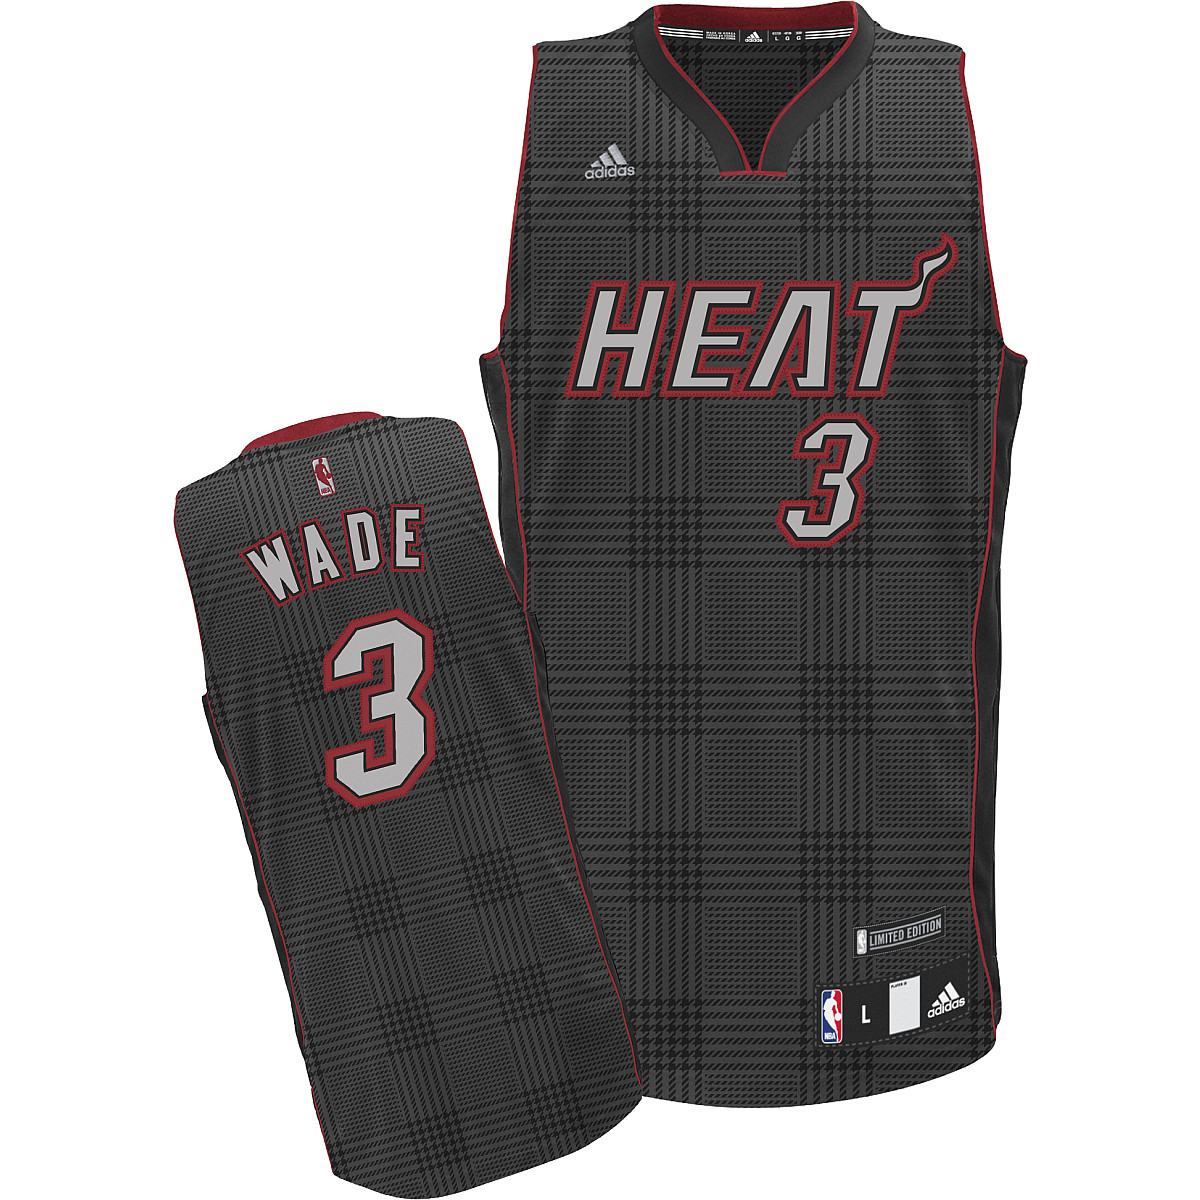 Heat 3 Wade Grey Jersey